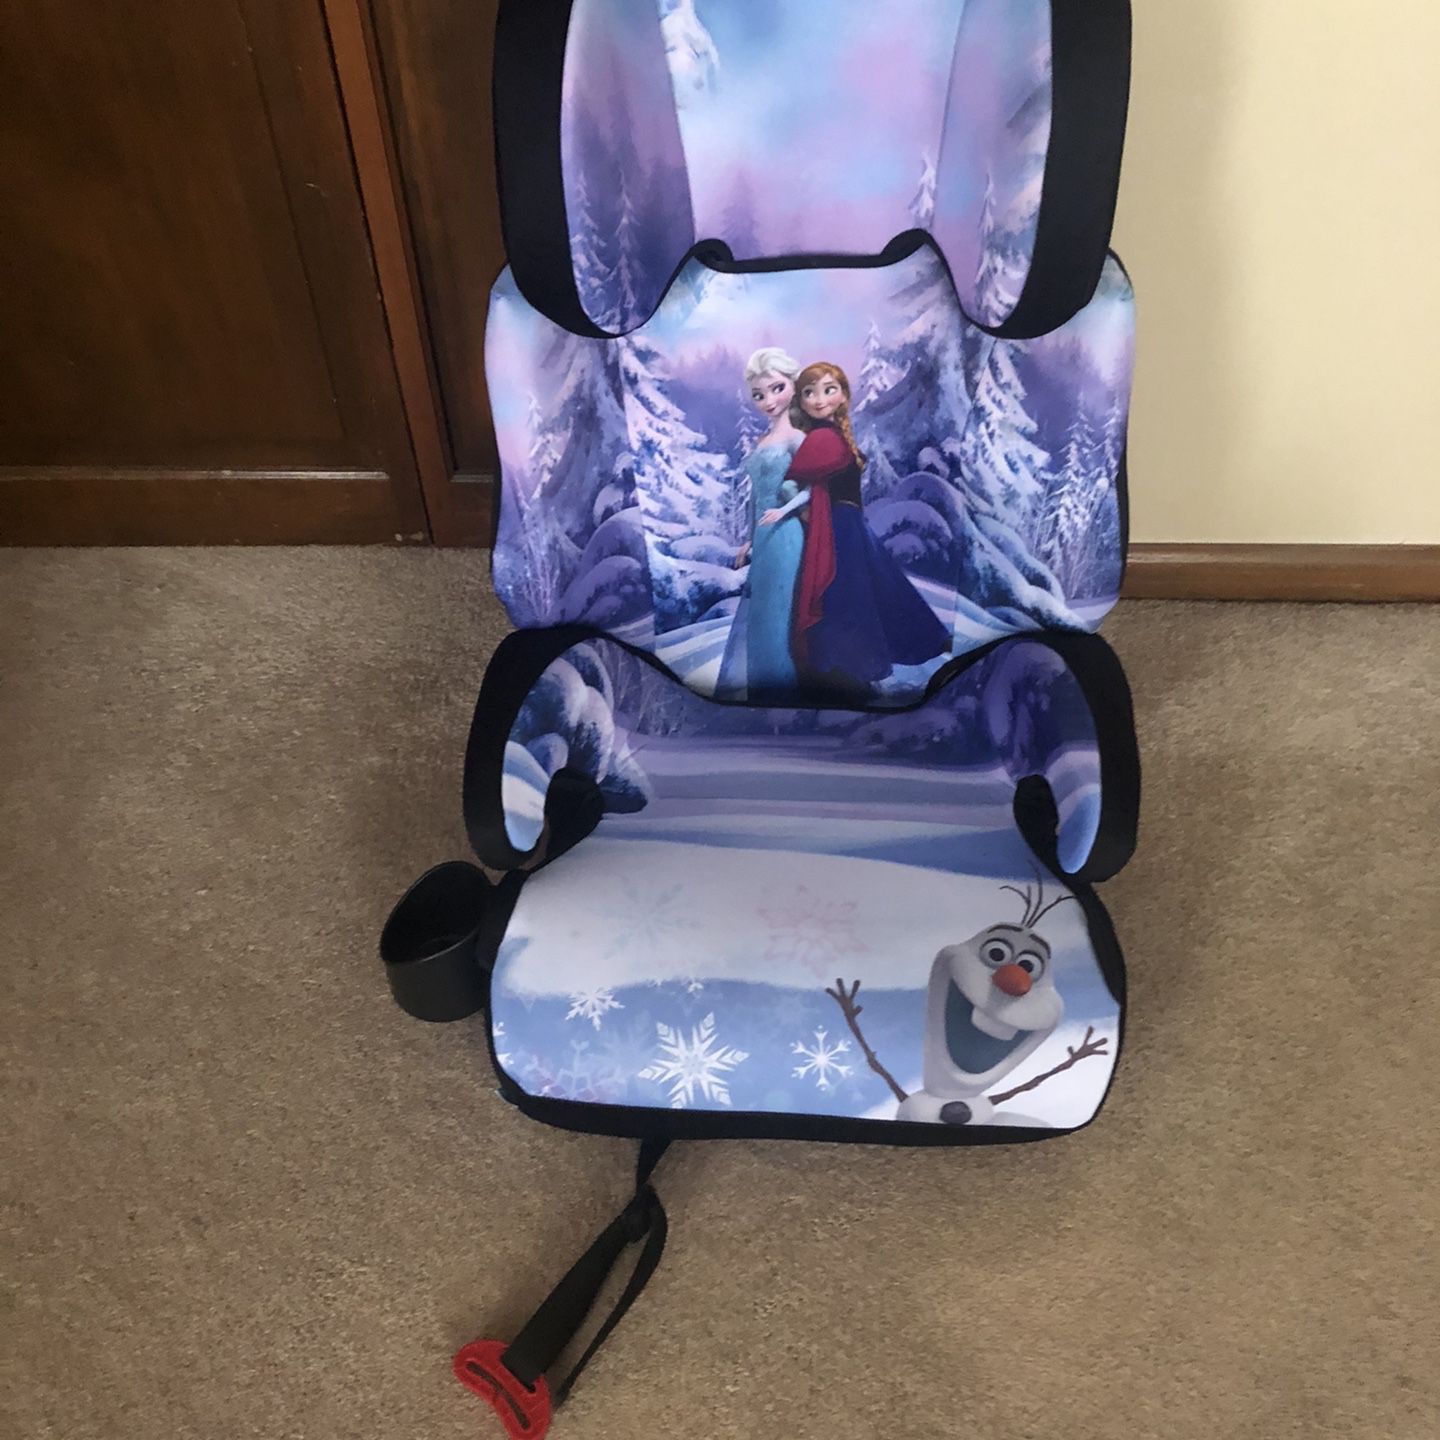 KidsEmbrace High-Back Booster Car Seat, Disney Frozen Elsa and Anna